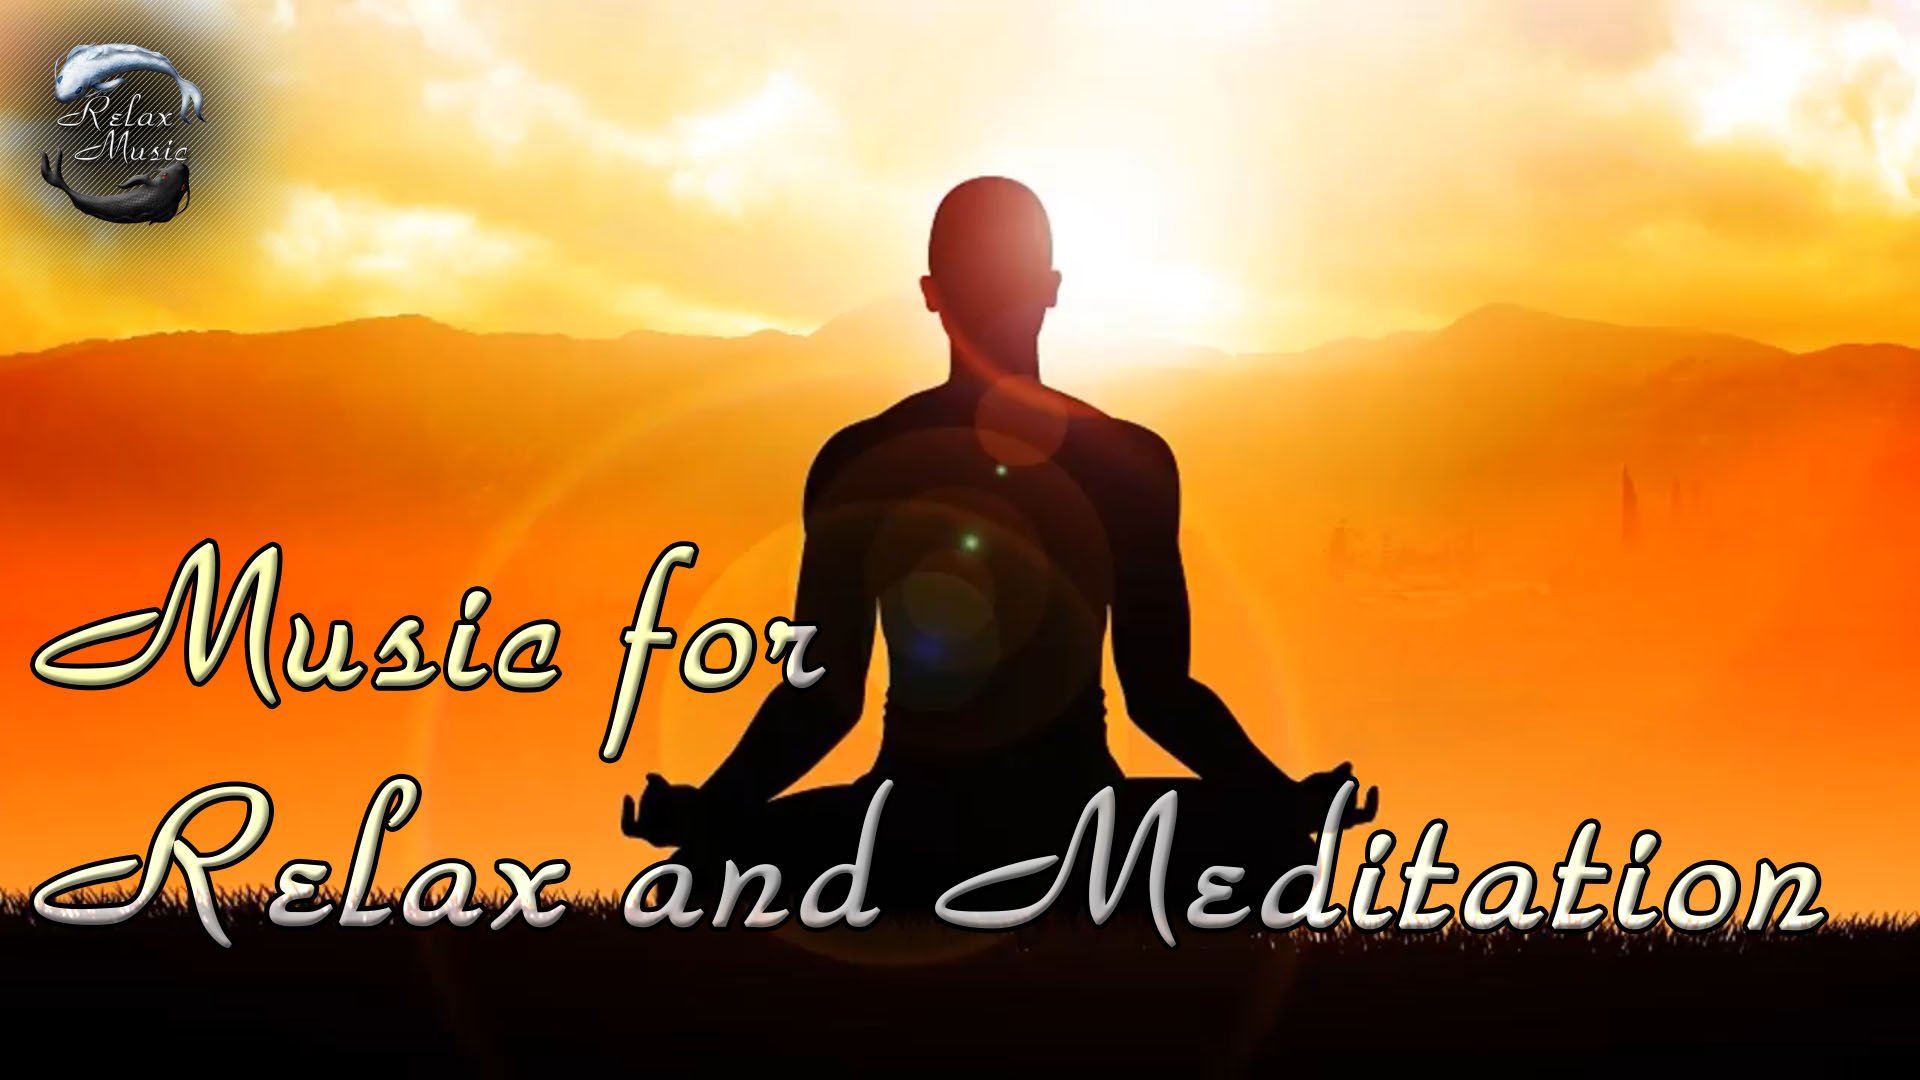 Музыка для медитации шум. Звуки природы для медитации. Медитация музыка без слов. Музыка для медитации. Музыка для медитации 15 минут.